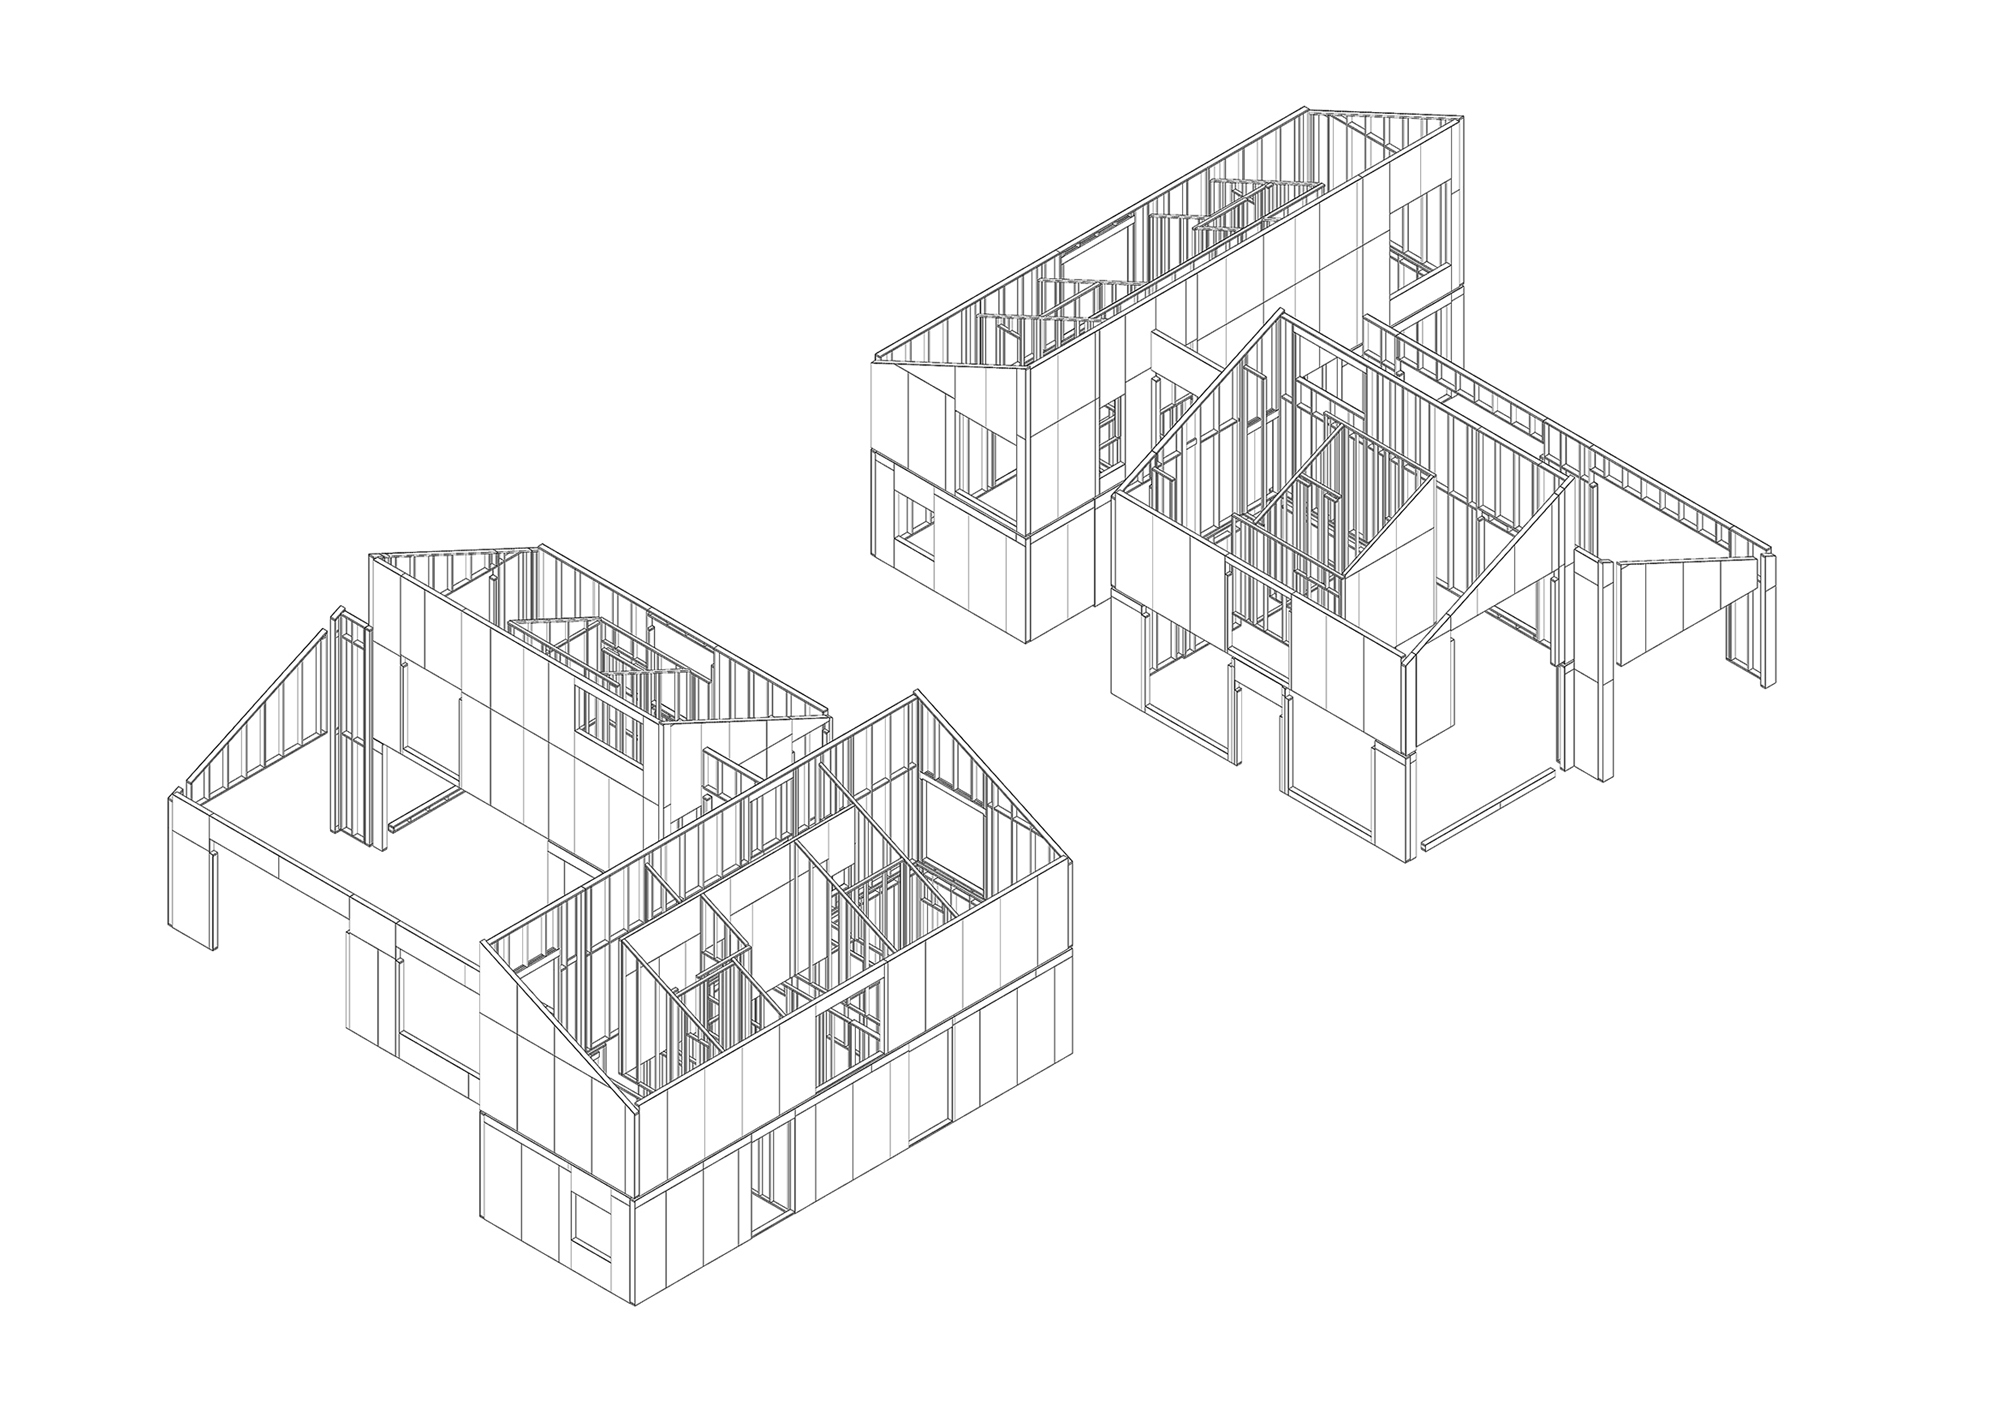 Erbar Mattes Architects Wimbledon custom new build timber frame house axo